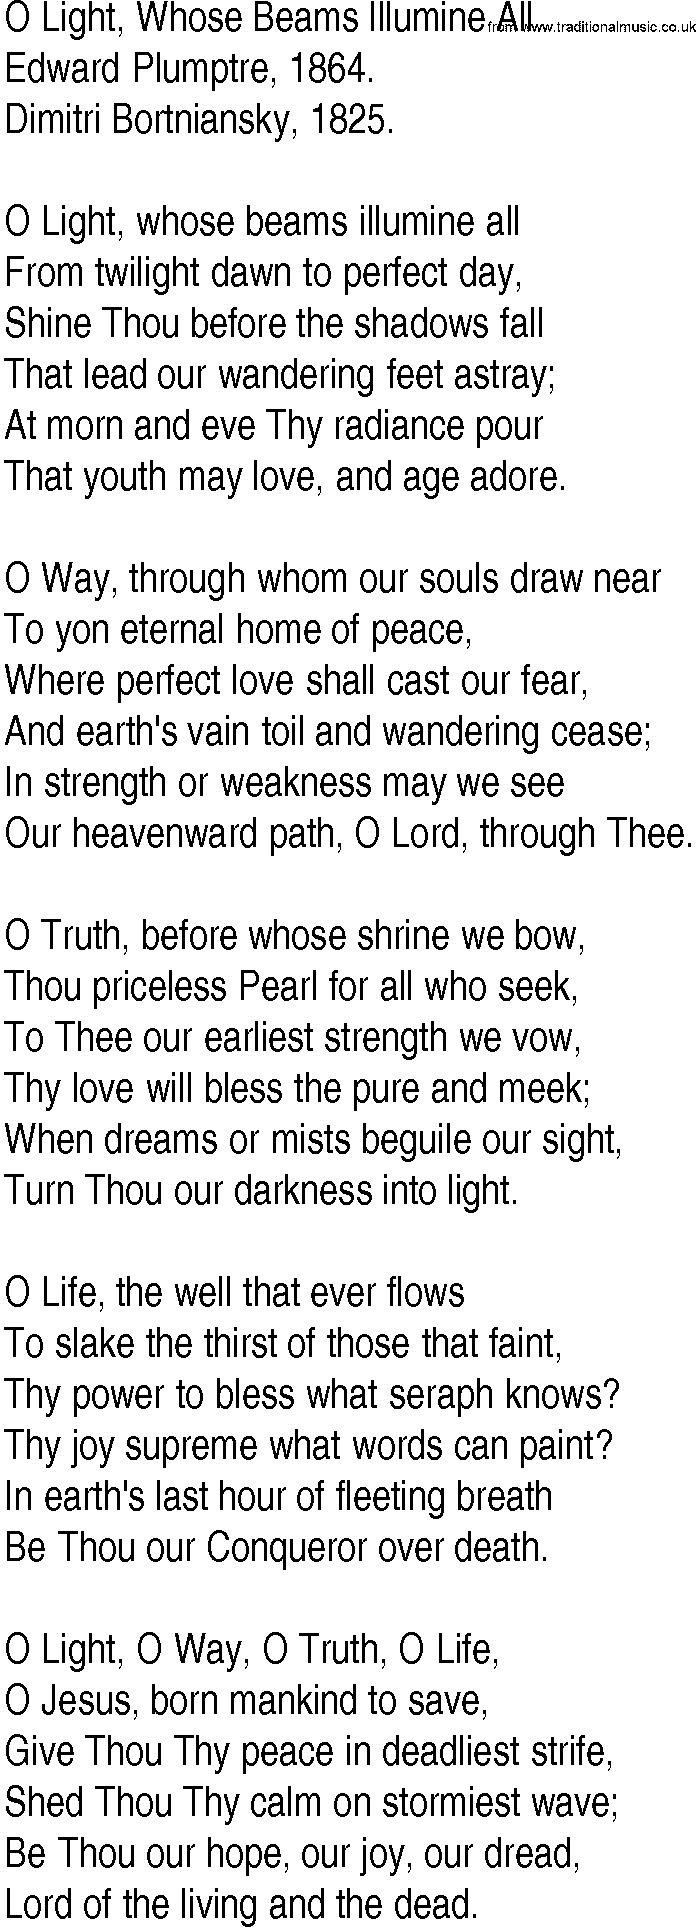 Hymn and Gospel Song: O Light, Whose Beams Illumine All by Edward Plumptre lyrics